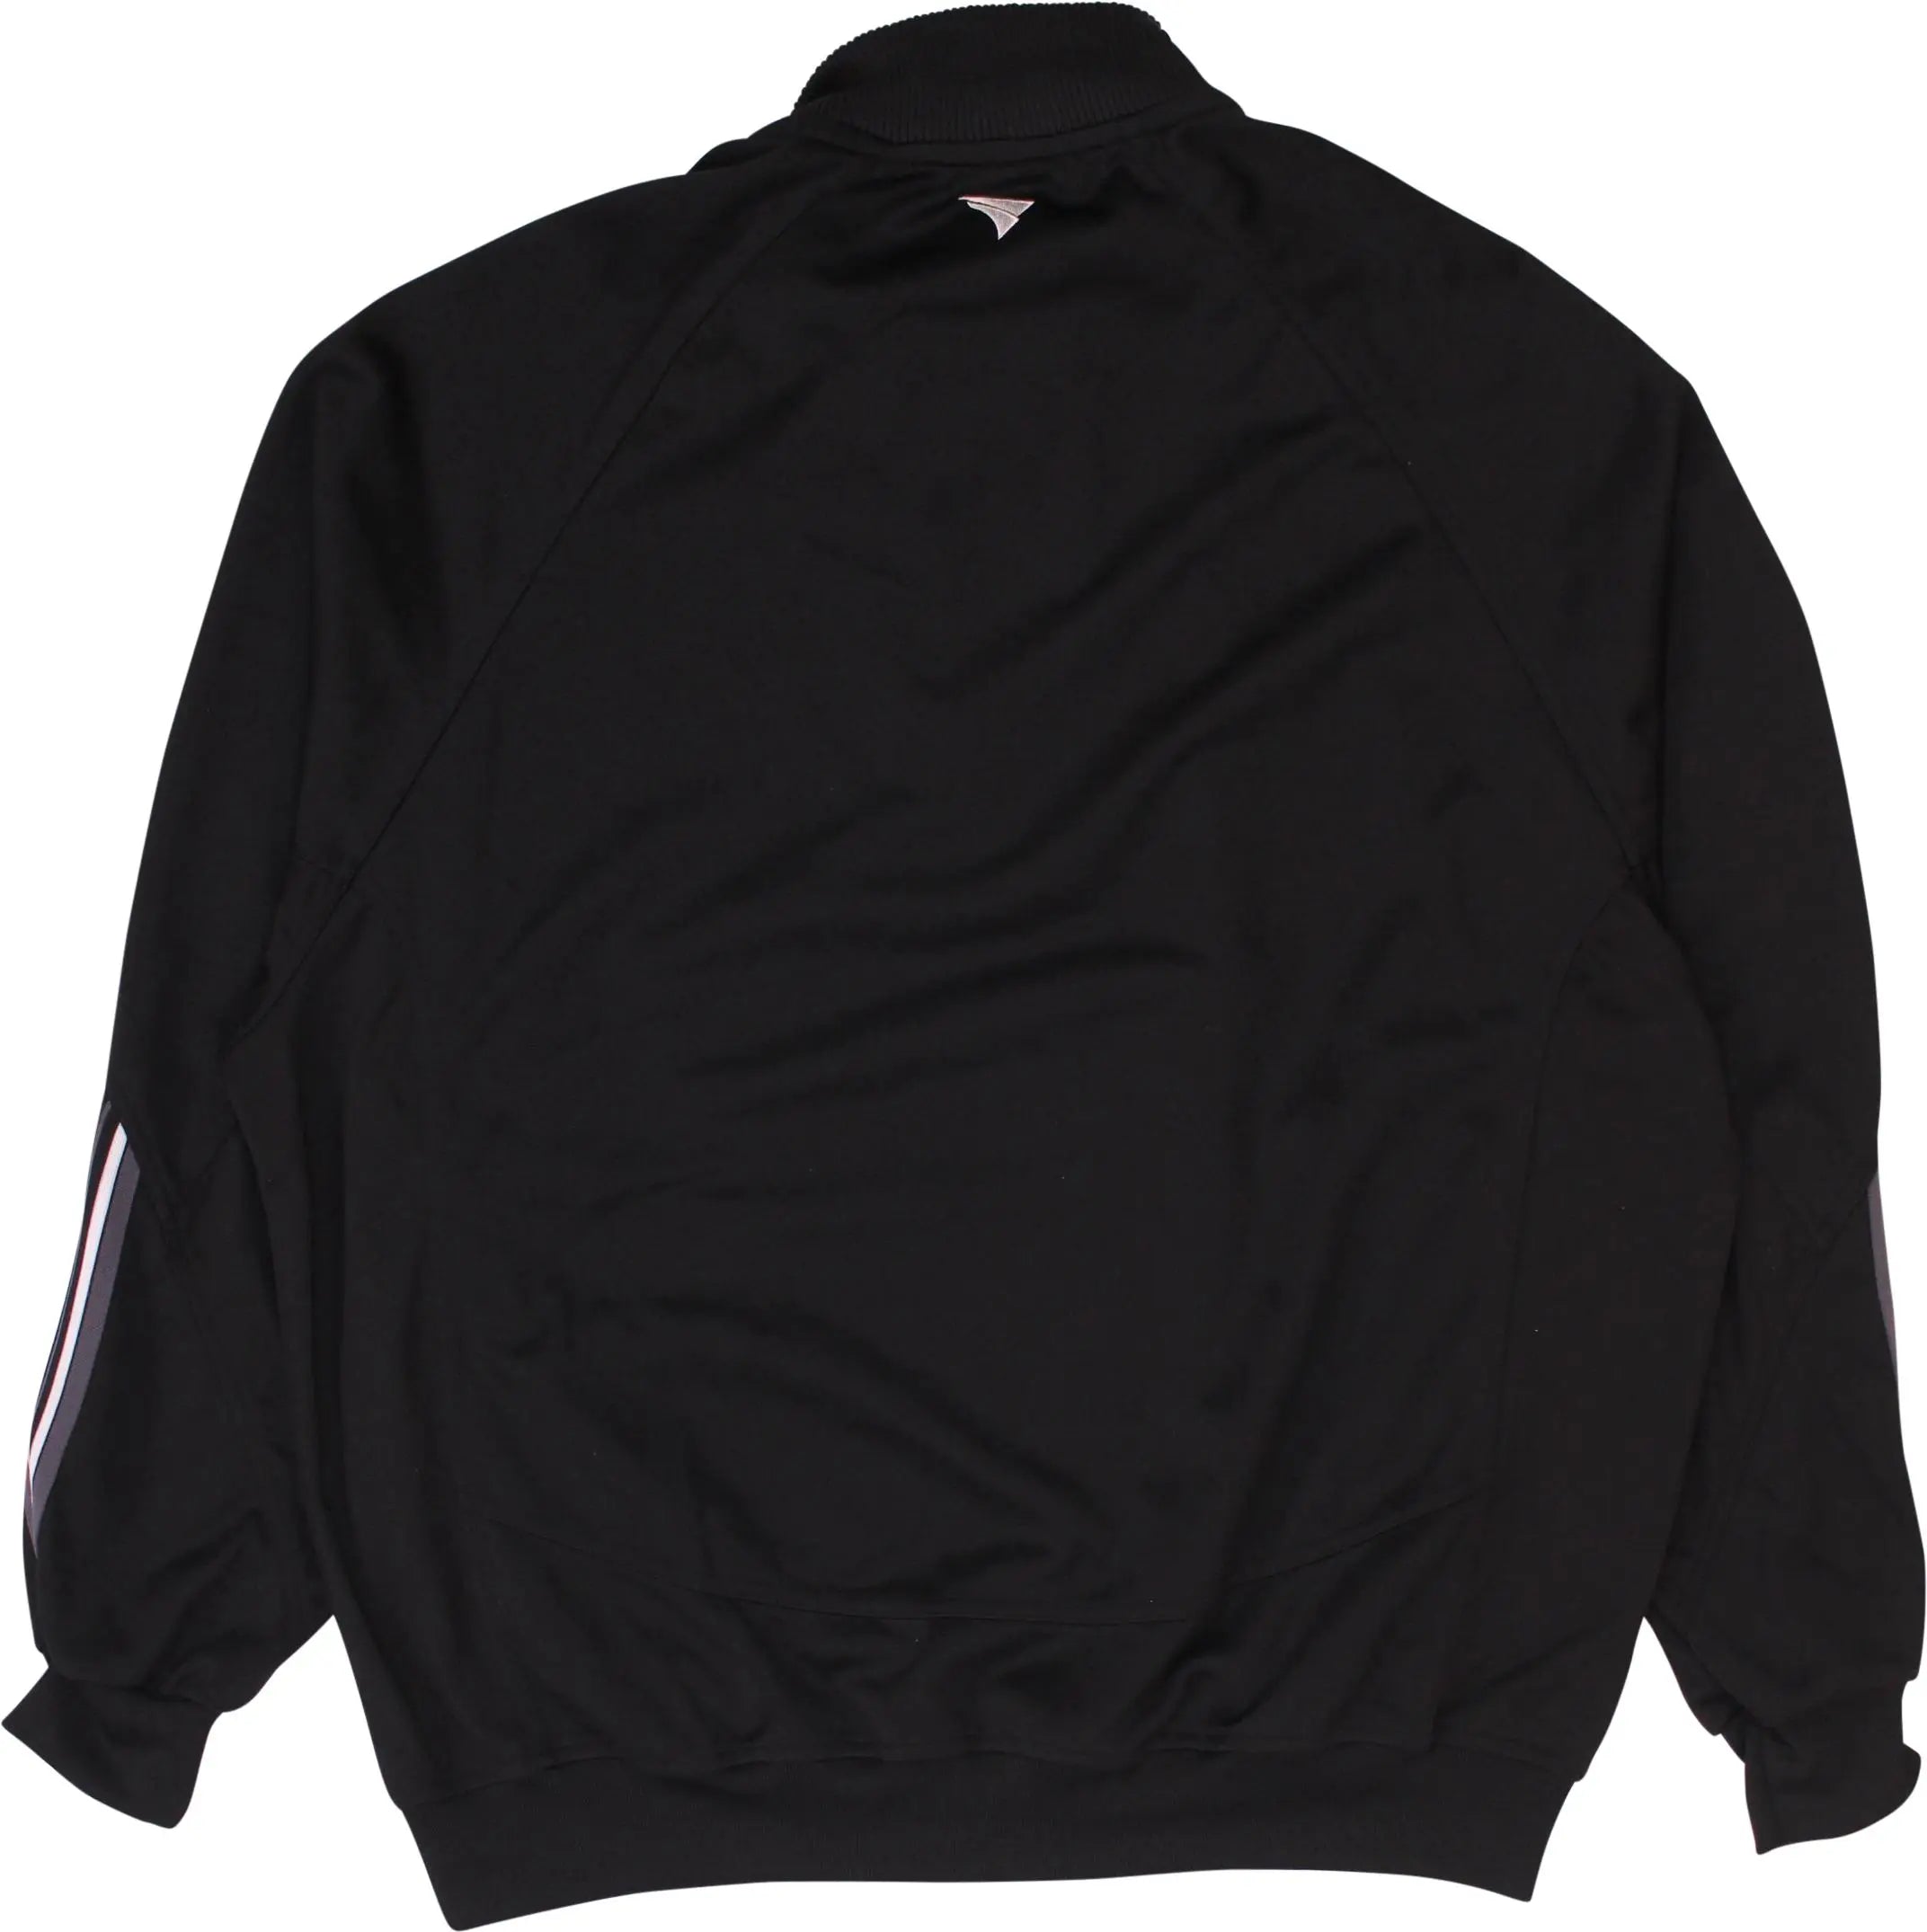 Jako - 90s/00s Black Track Jacket- ThriftTale.com - Vintage and second handclothing